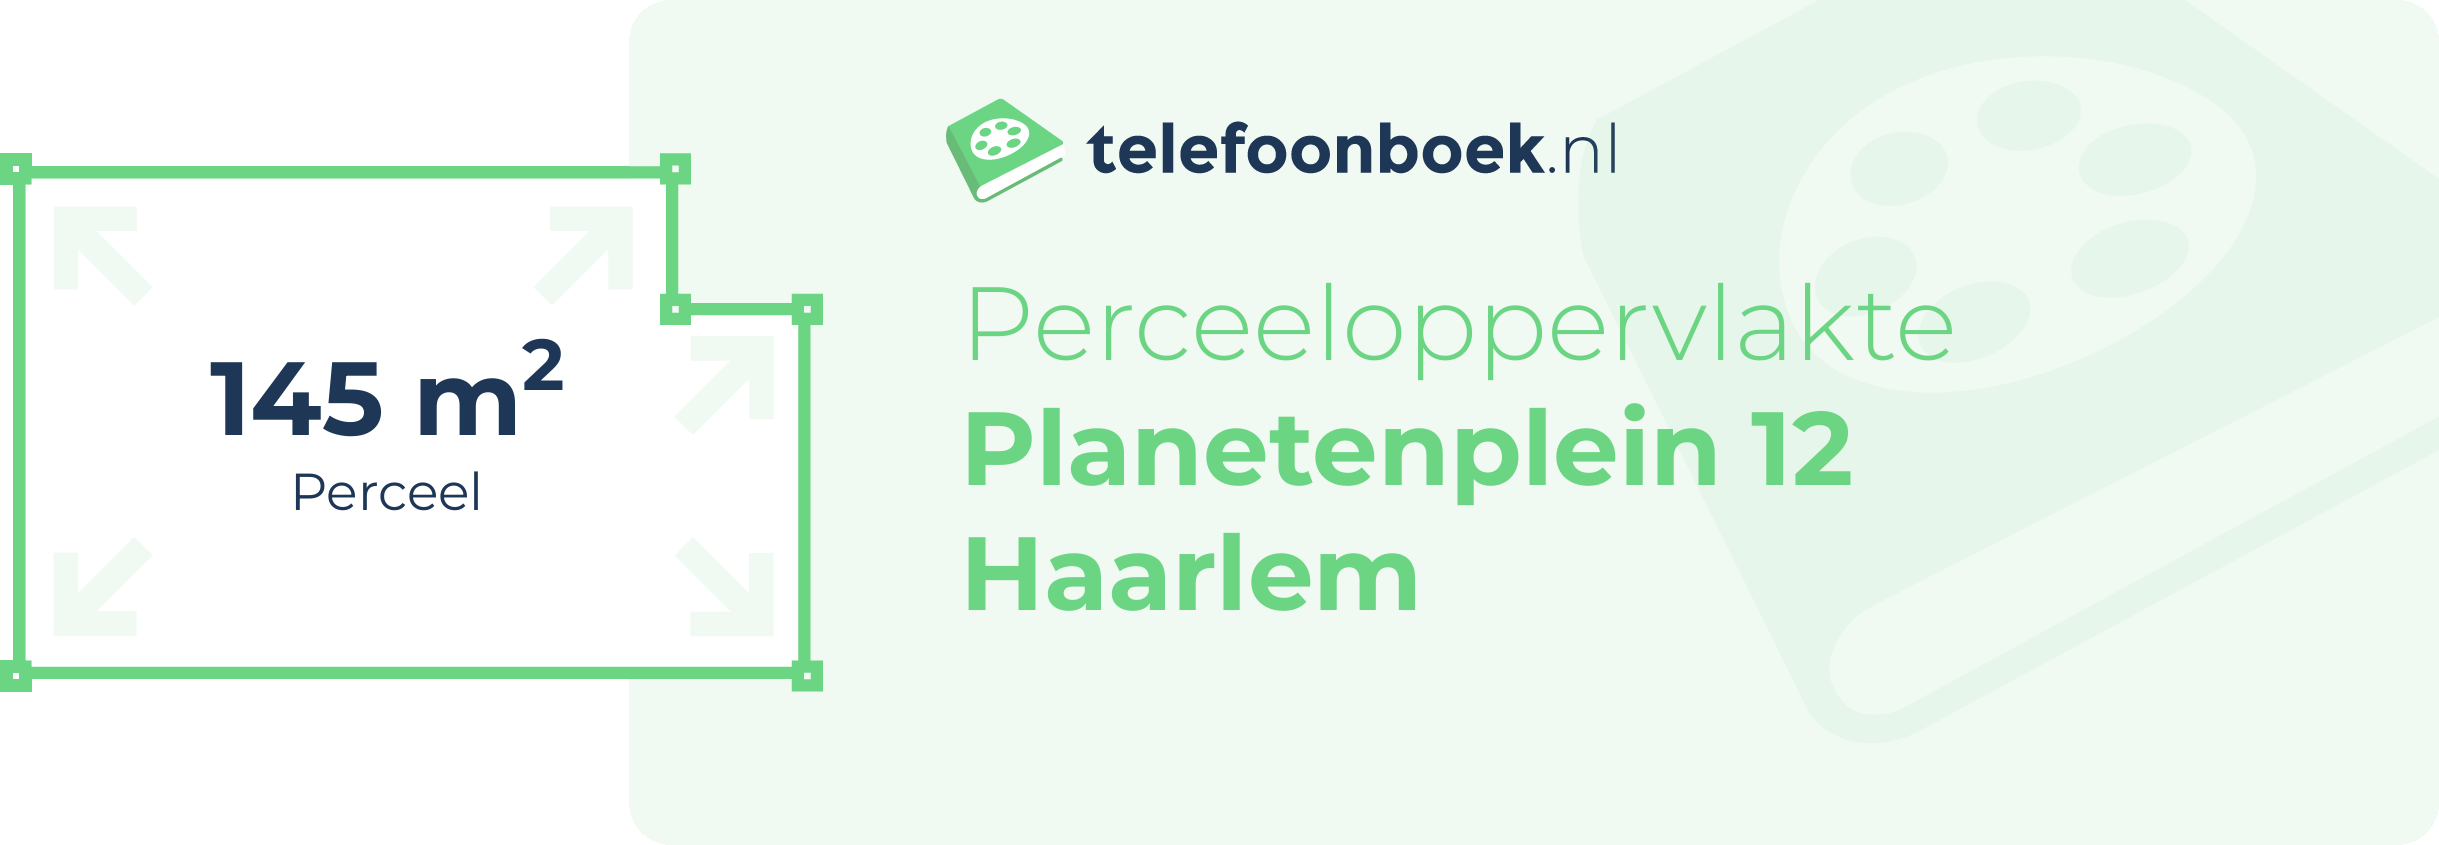 Perceeloppervlakte Planetenplein 12 Haarlem